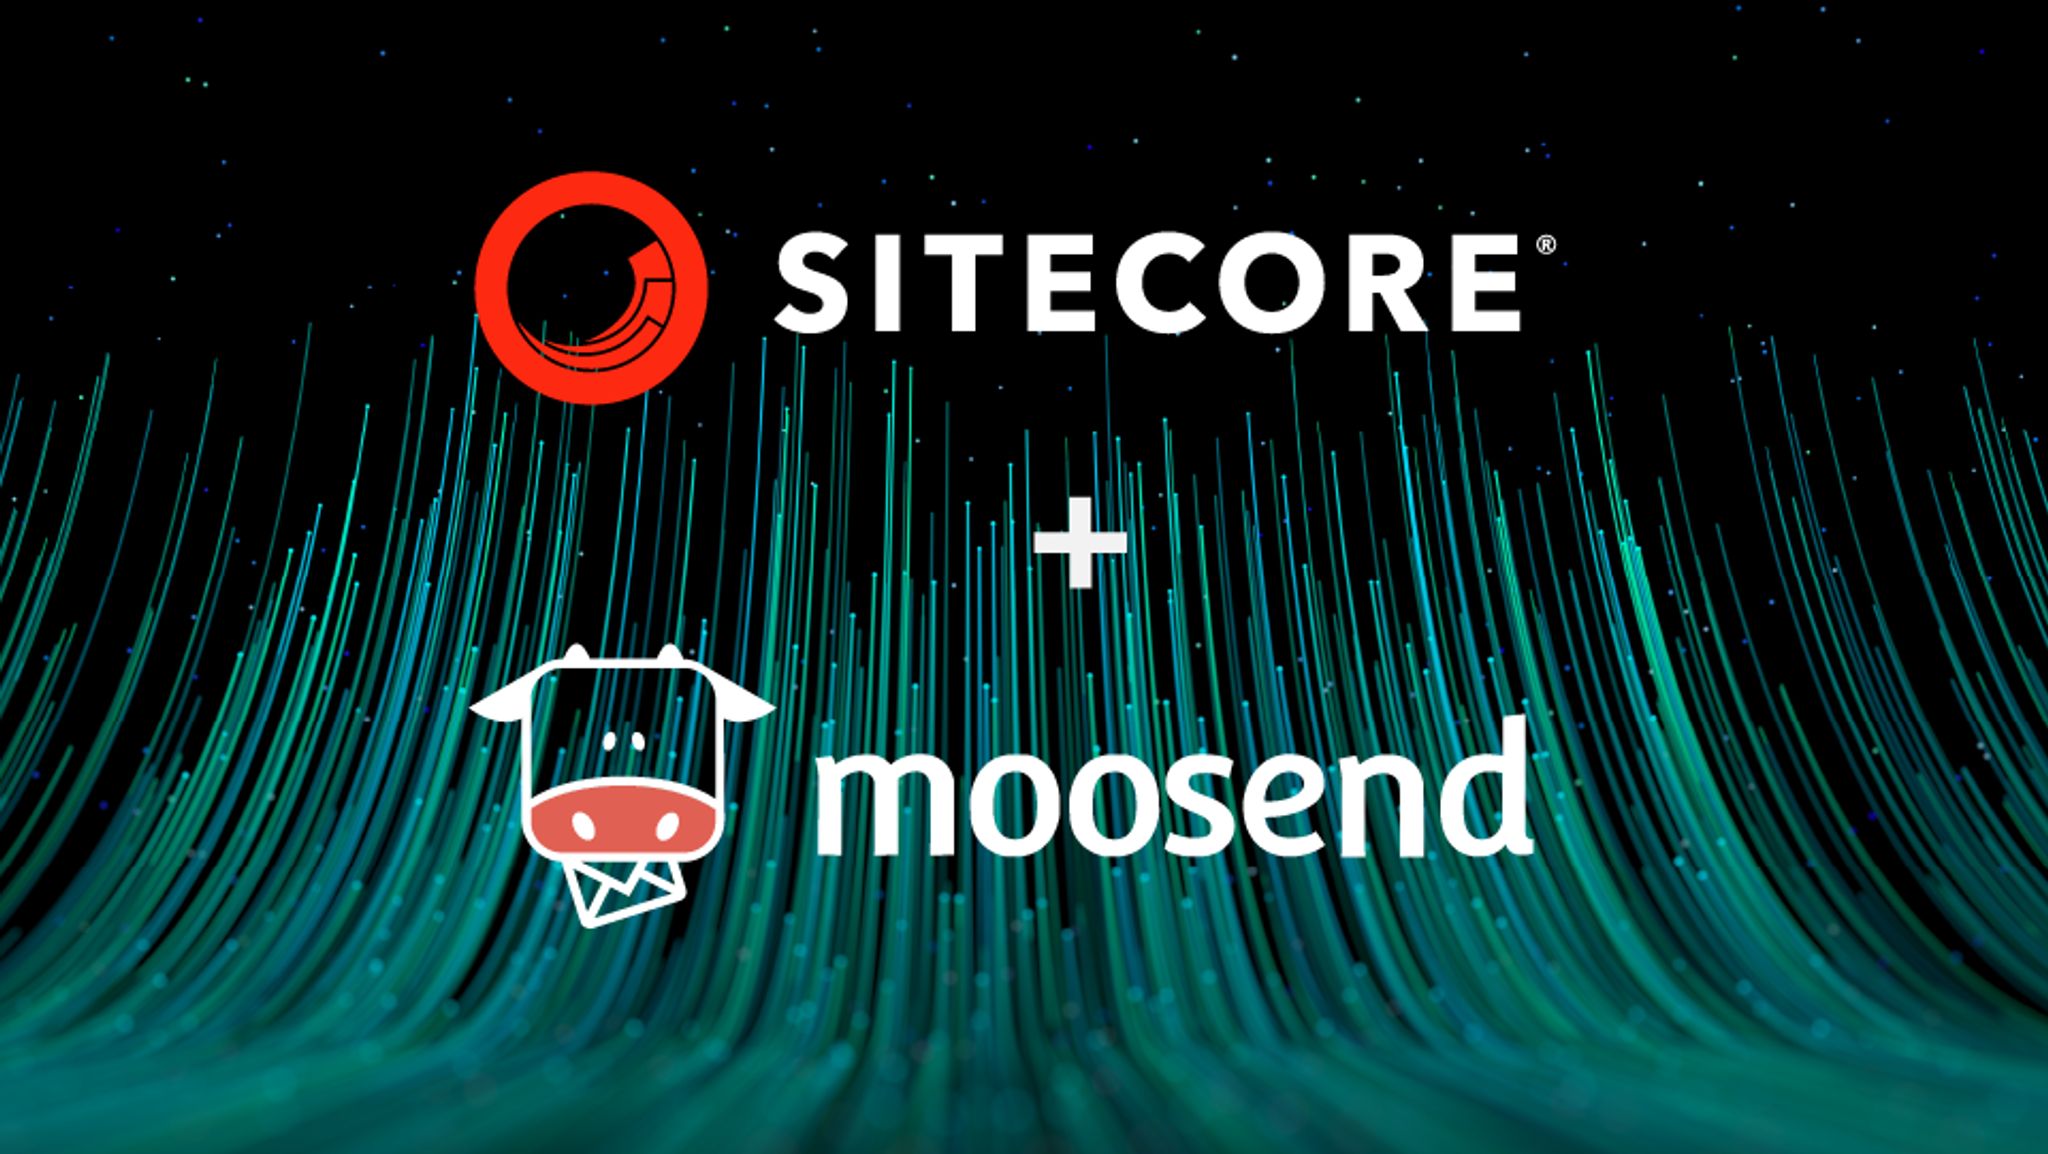 Sitecore logo plus sign and Moosend logo